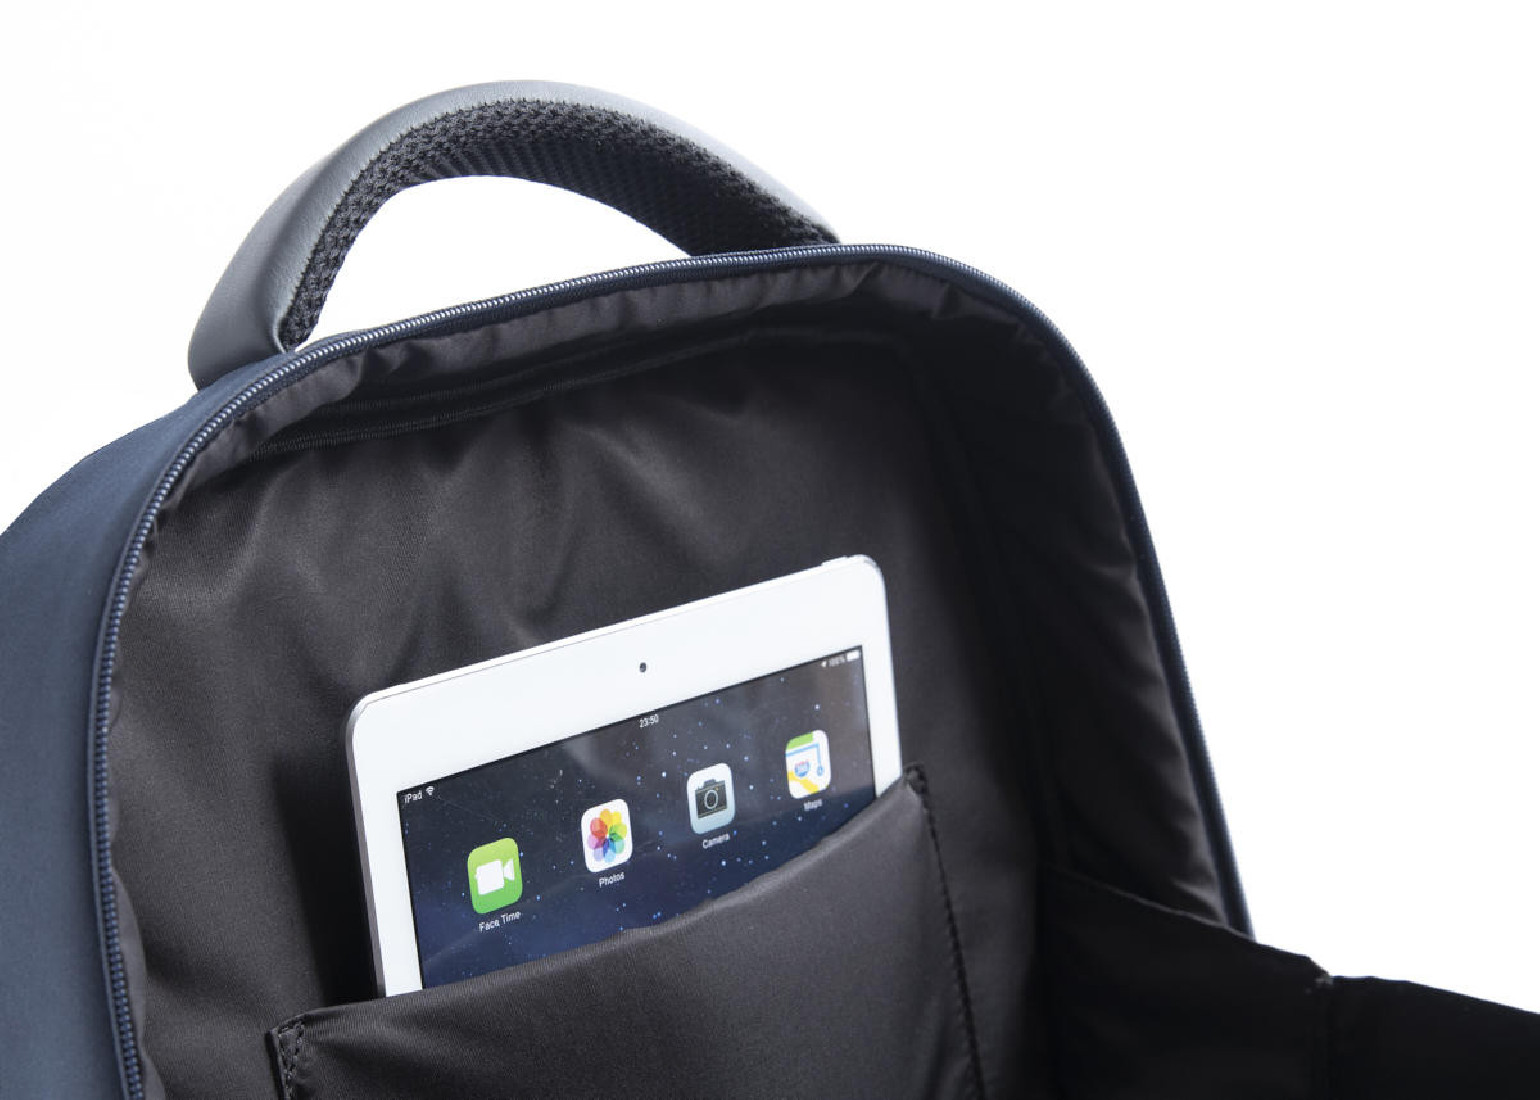 NAVA Organized Slim backpack 2 compartments with RFID secret pocket - Aero Night Blue